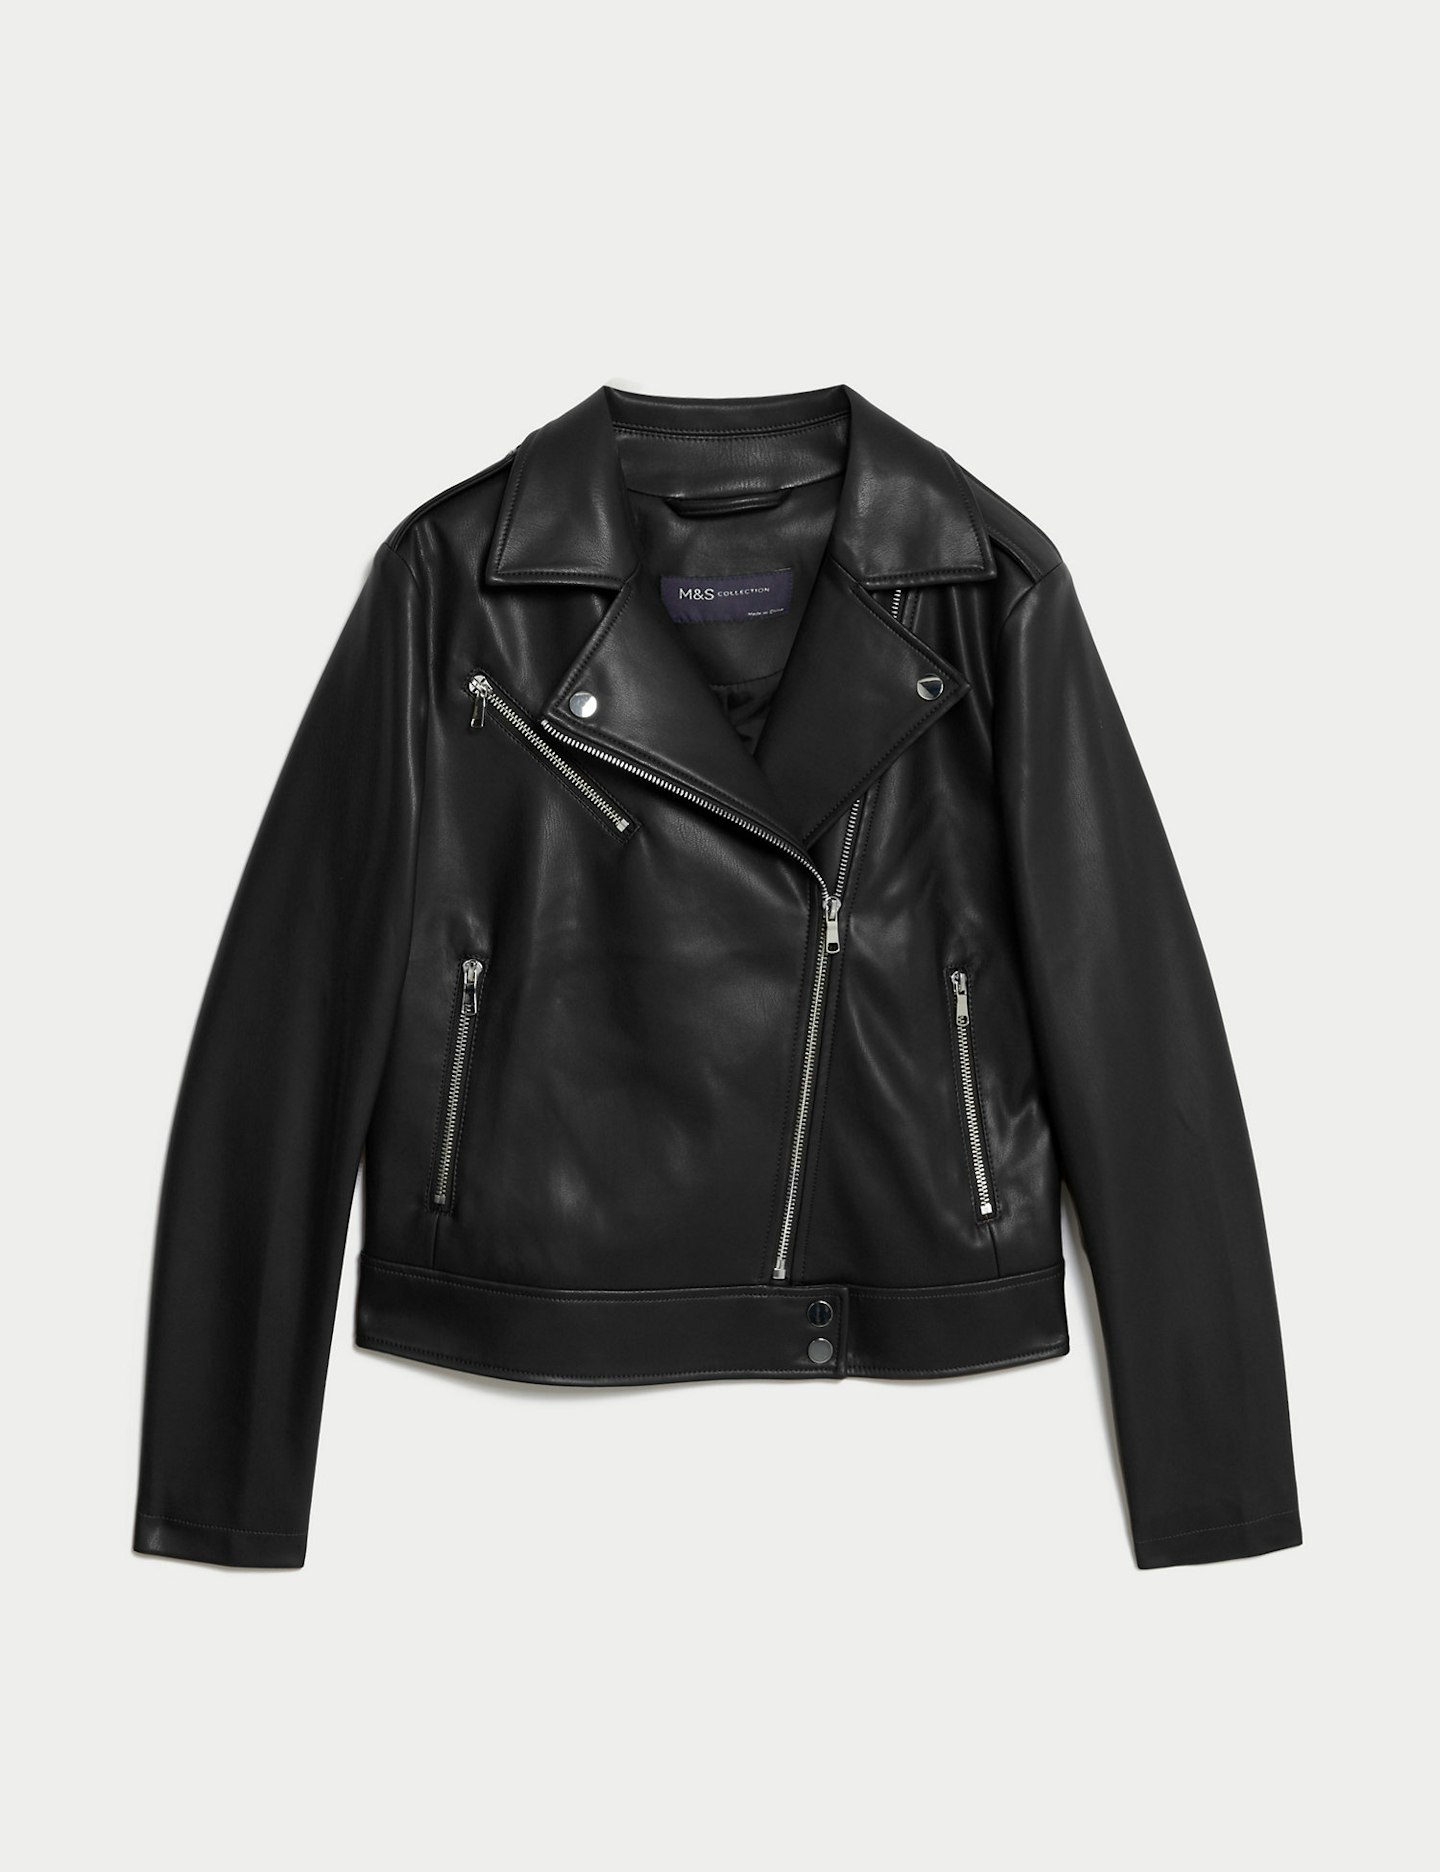 M&S faux leather biker jacket